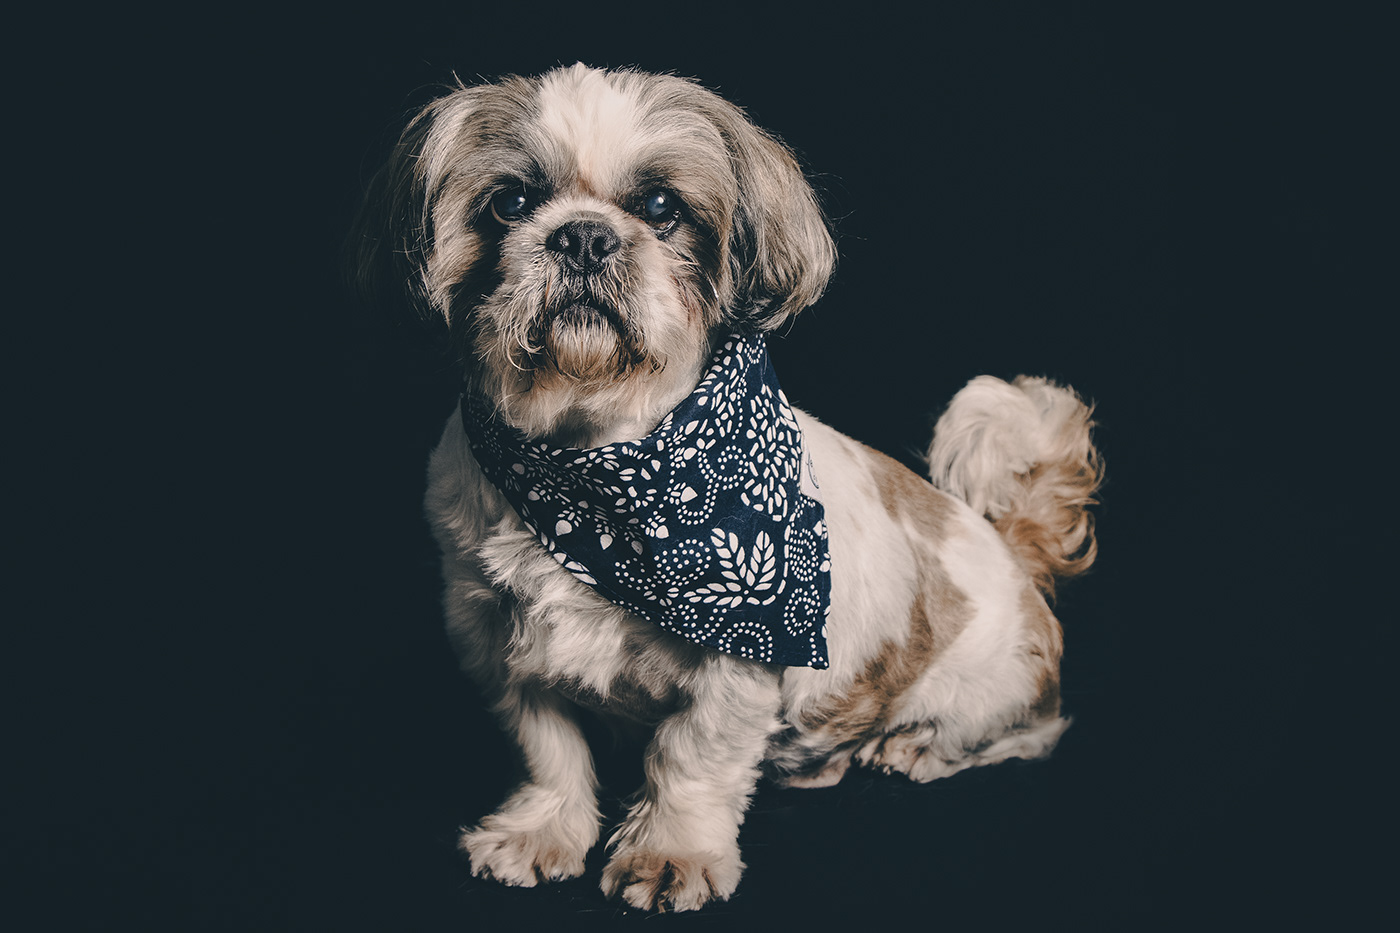 Shih Tzu animal portrait animal photography dog